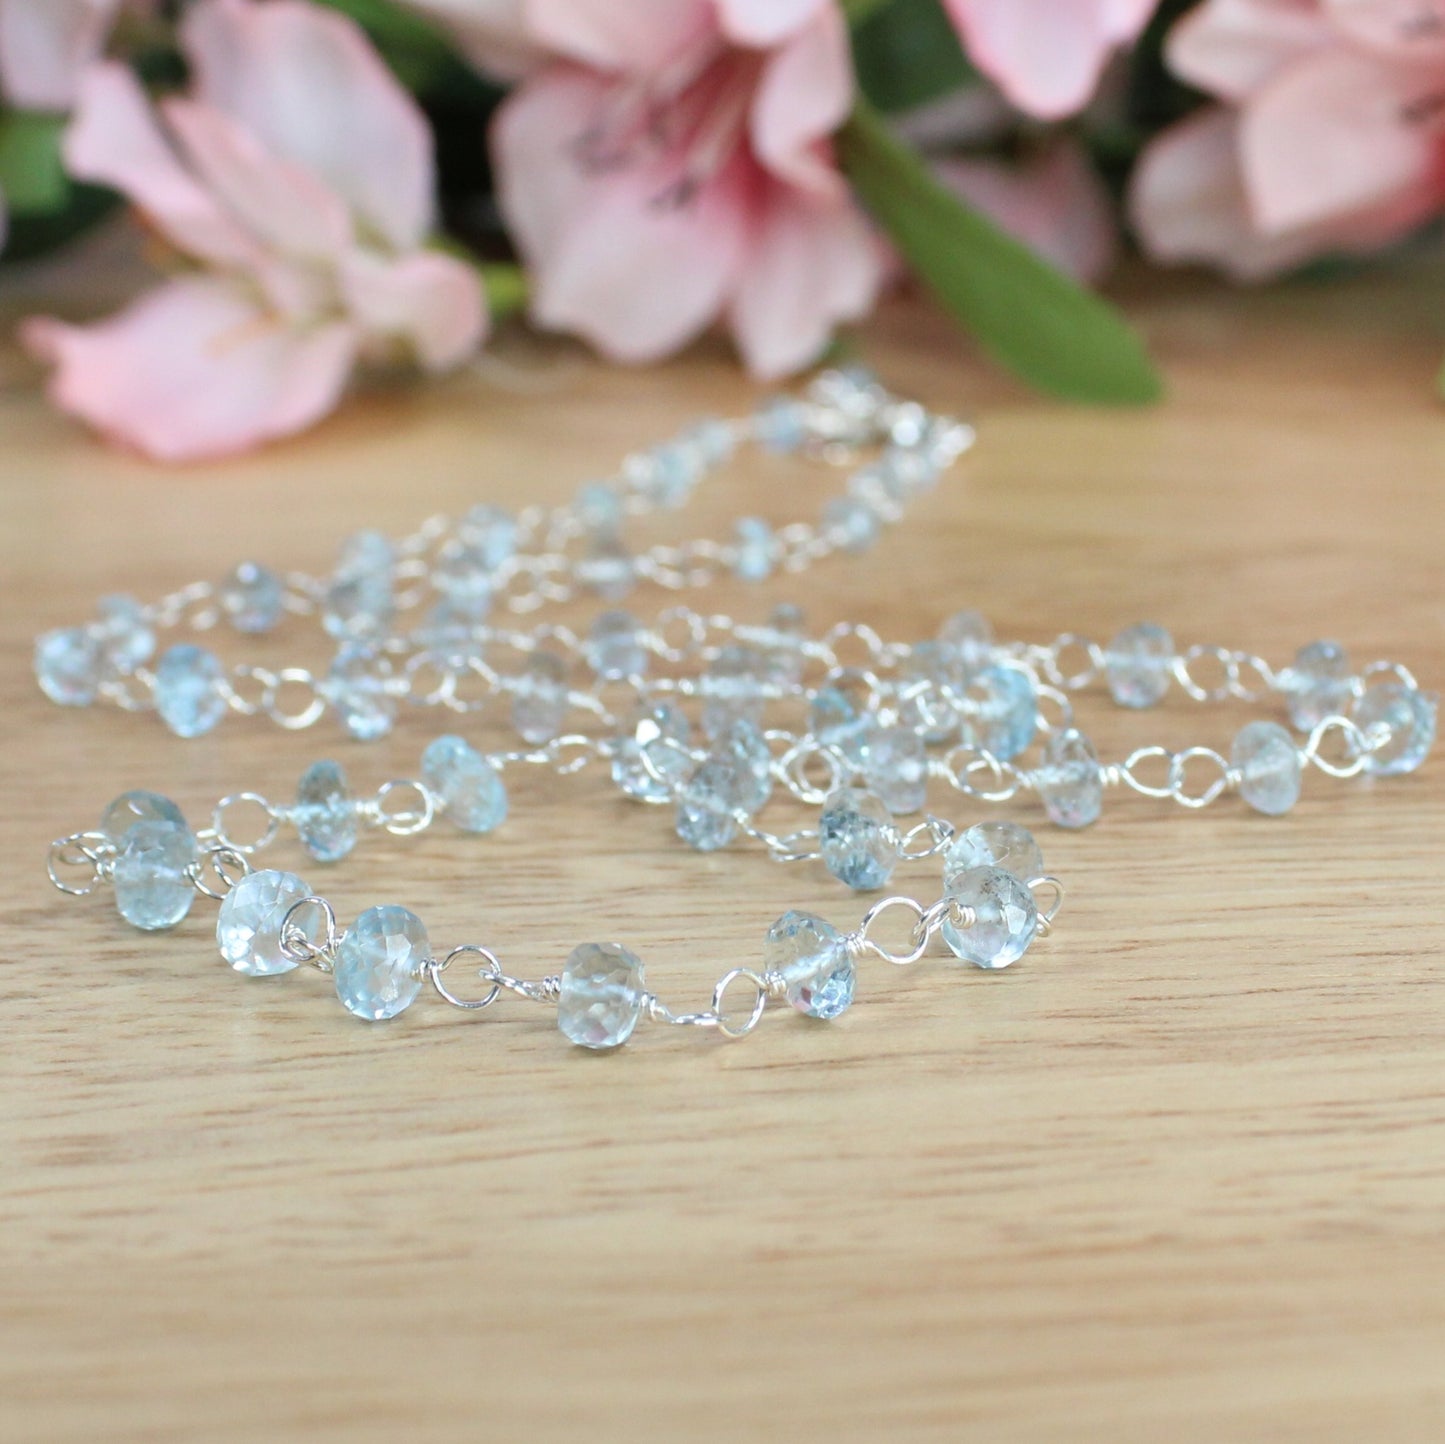 Genuine Aquamarine Gemstone Necklace - Saylor